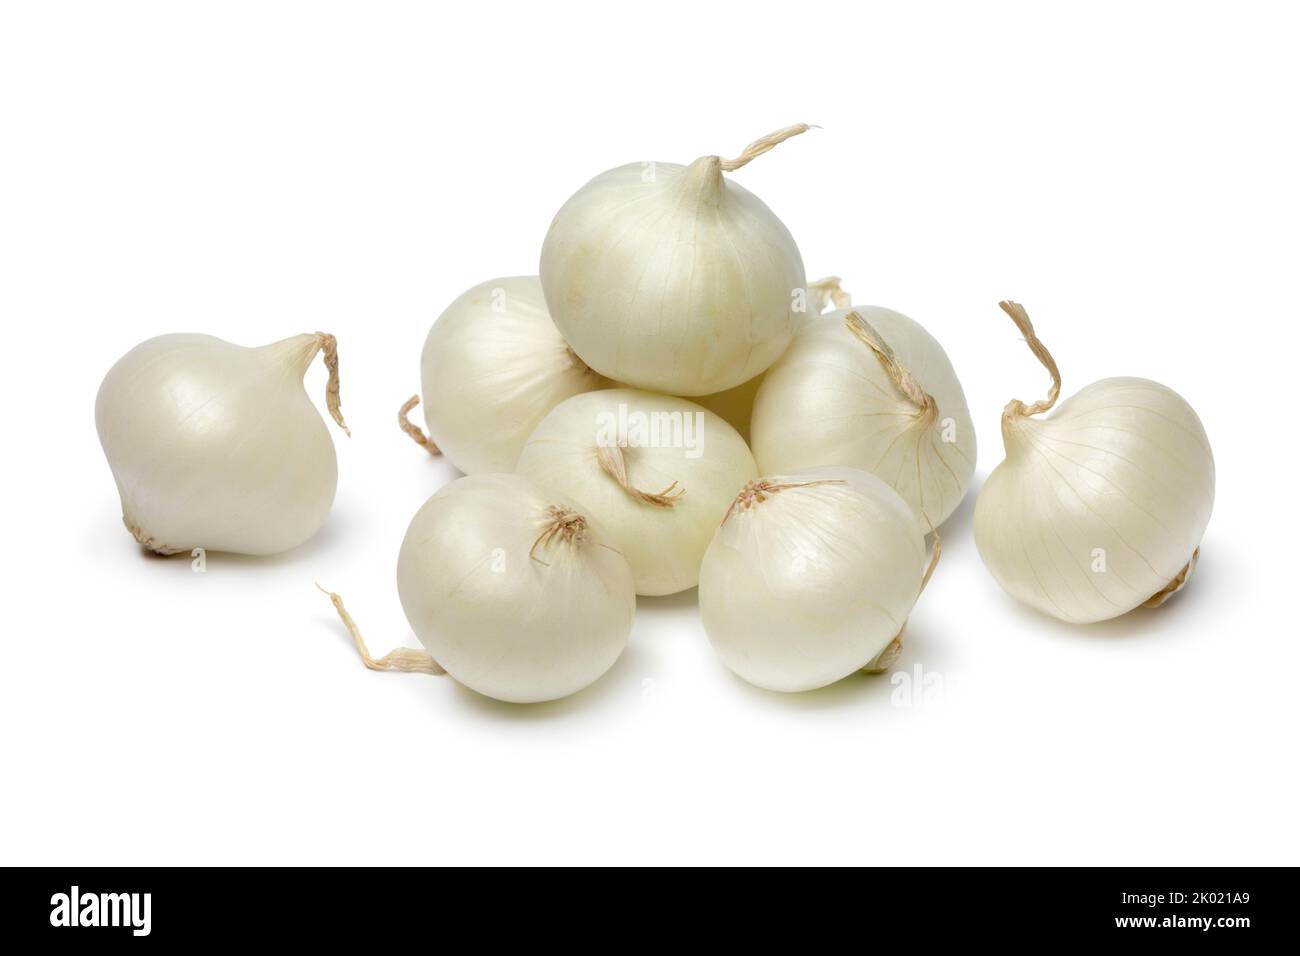 Pila de cebollas de perla fresca cruda de cerca aisladas sobre fondo blanco Foto de stock